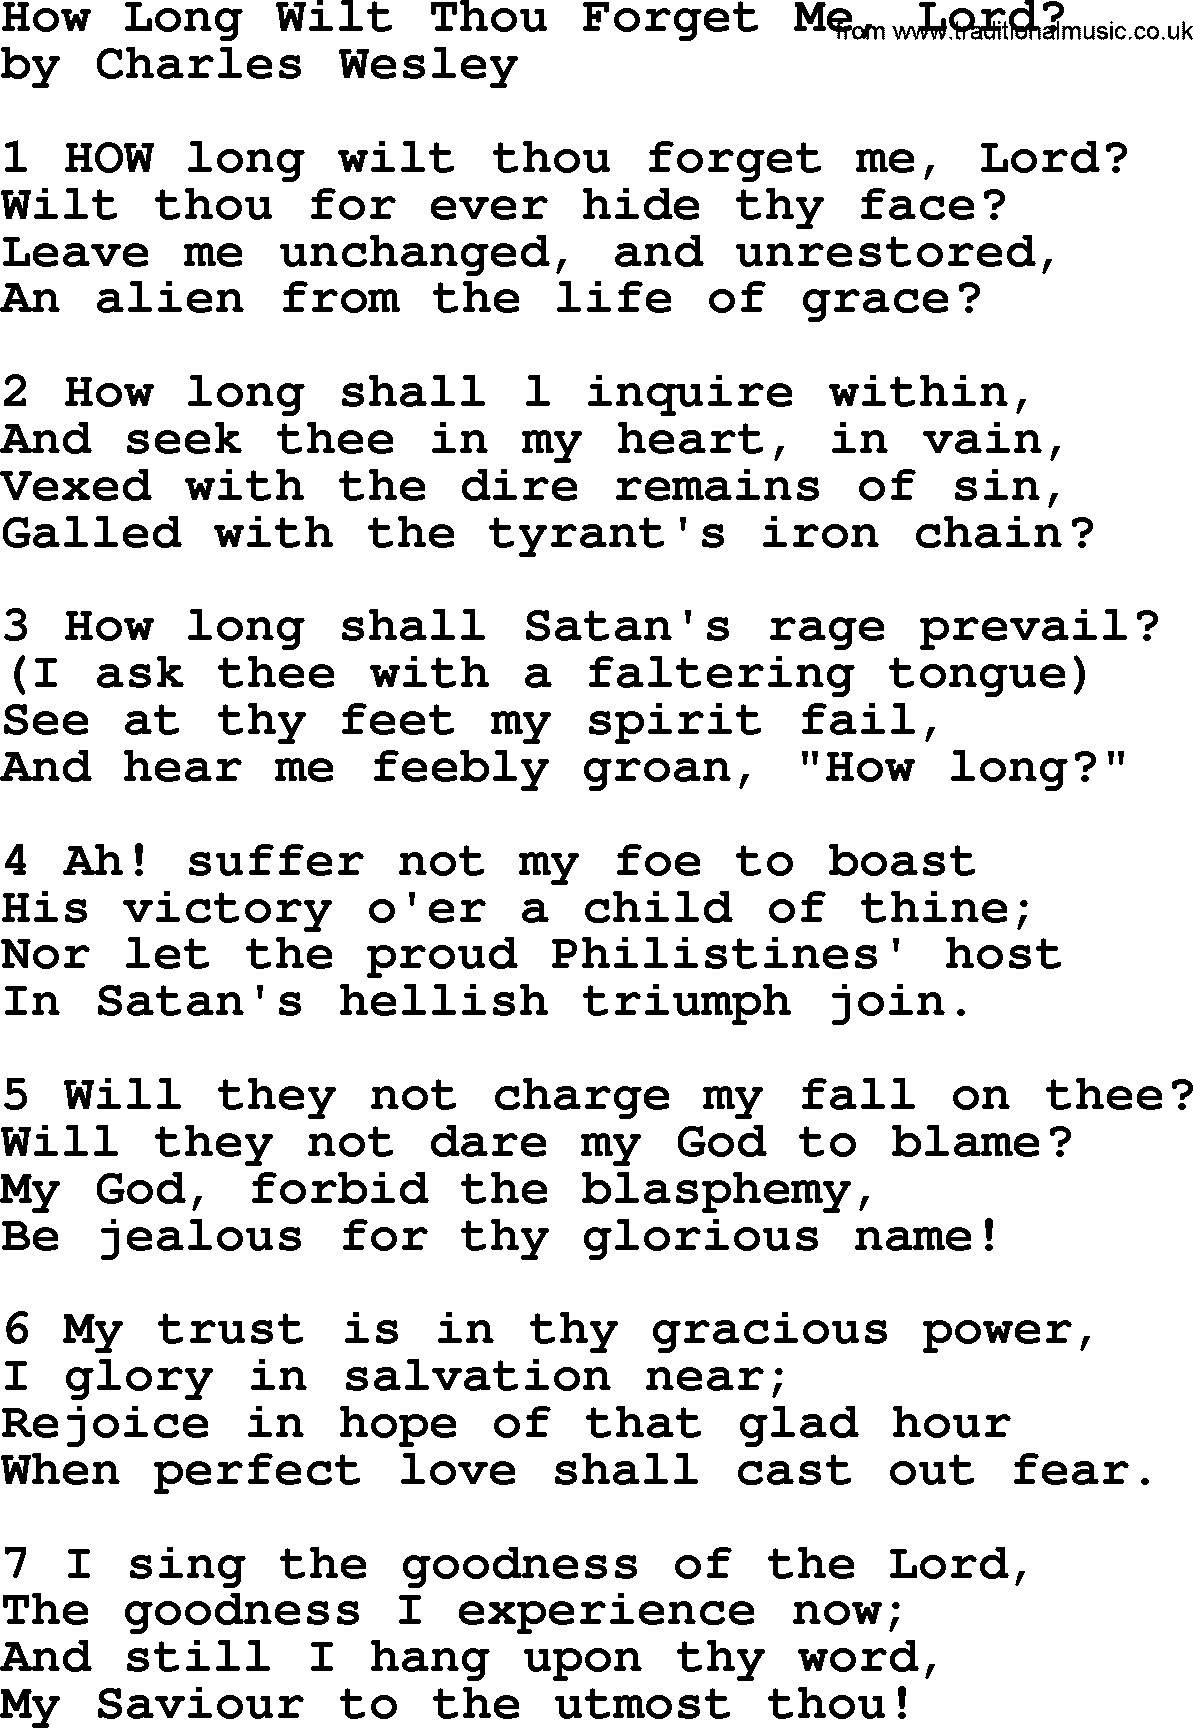 Charles Wesley hymn: How Long Wilt Thou Forget Me, Lord_, lyrics